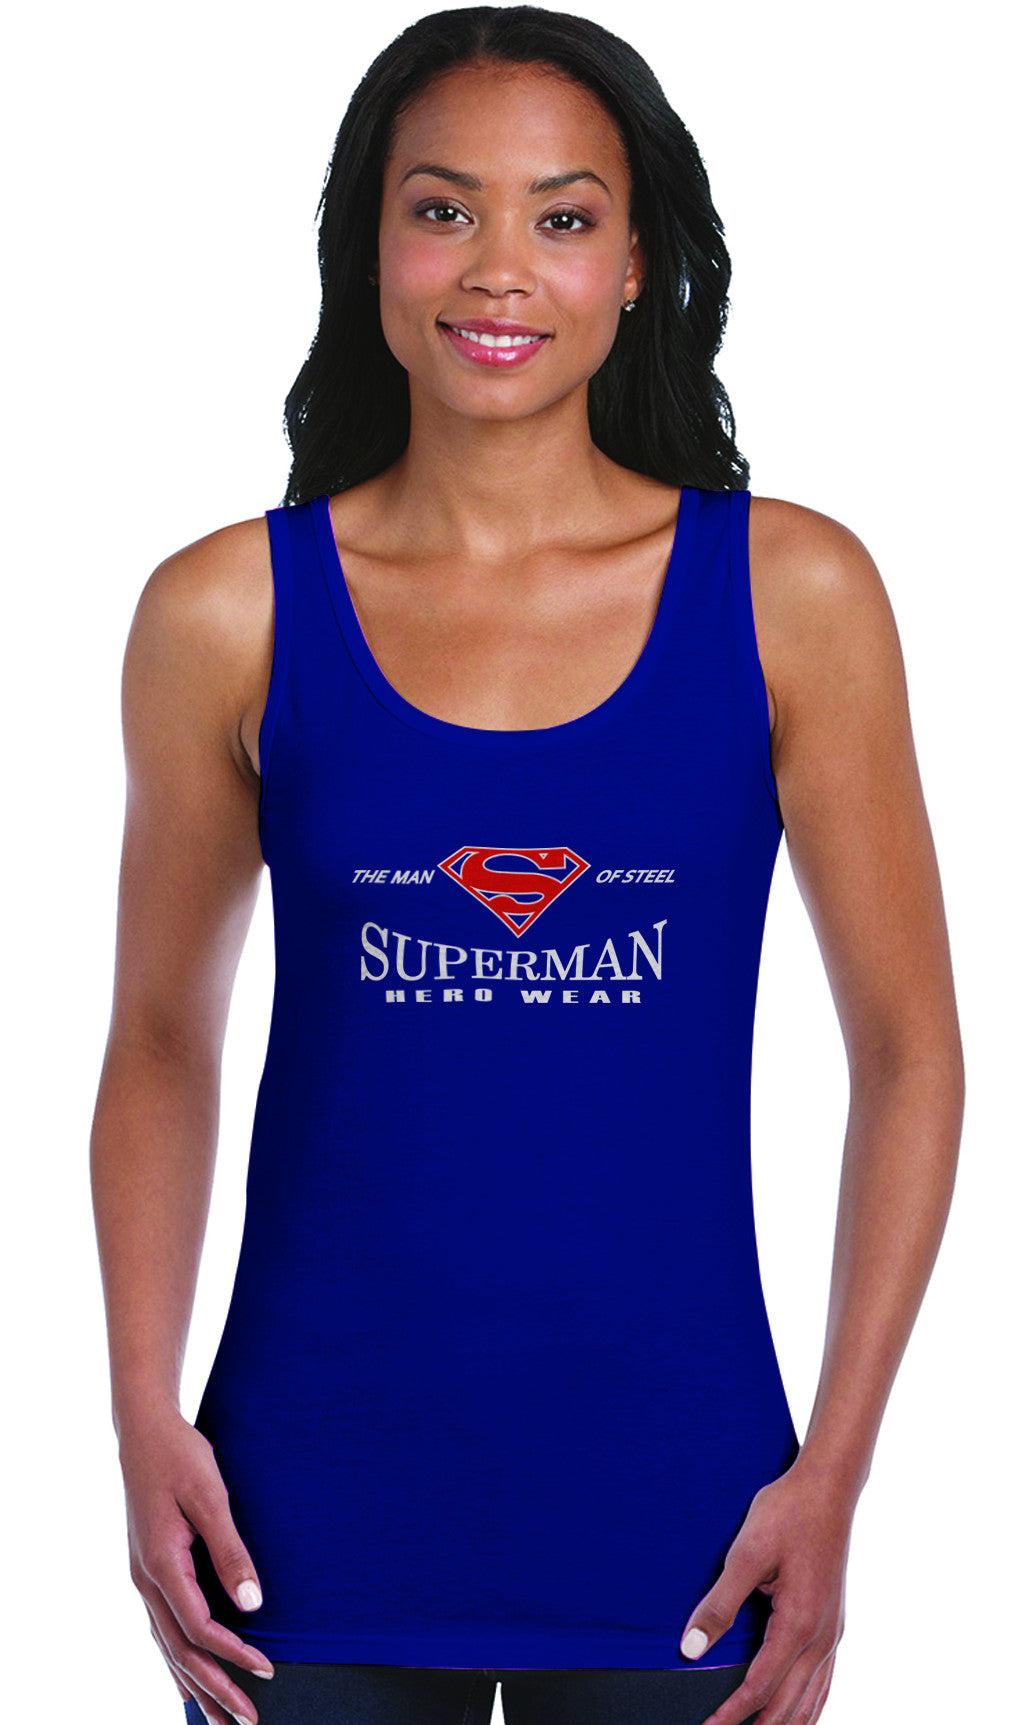 Superman Man of Steel Hero Wear Logo on Navy Fitted Tank top for Women - TshirtNow.net - 1